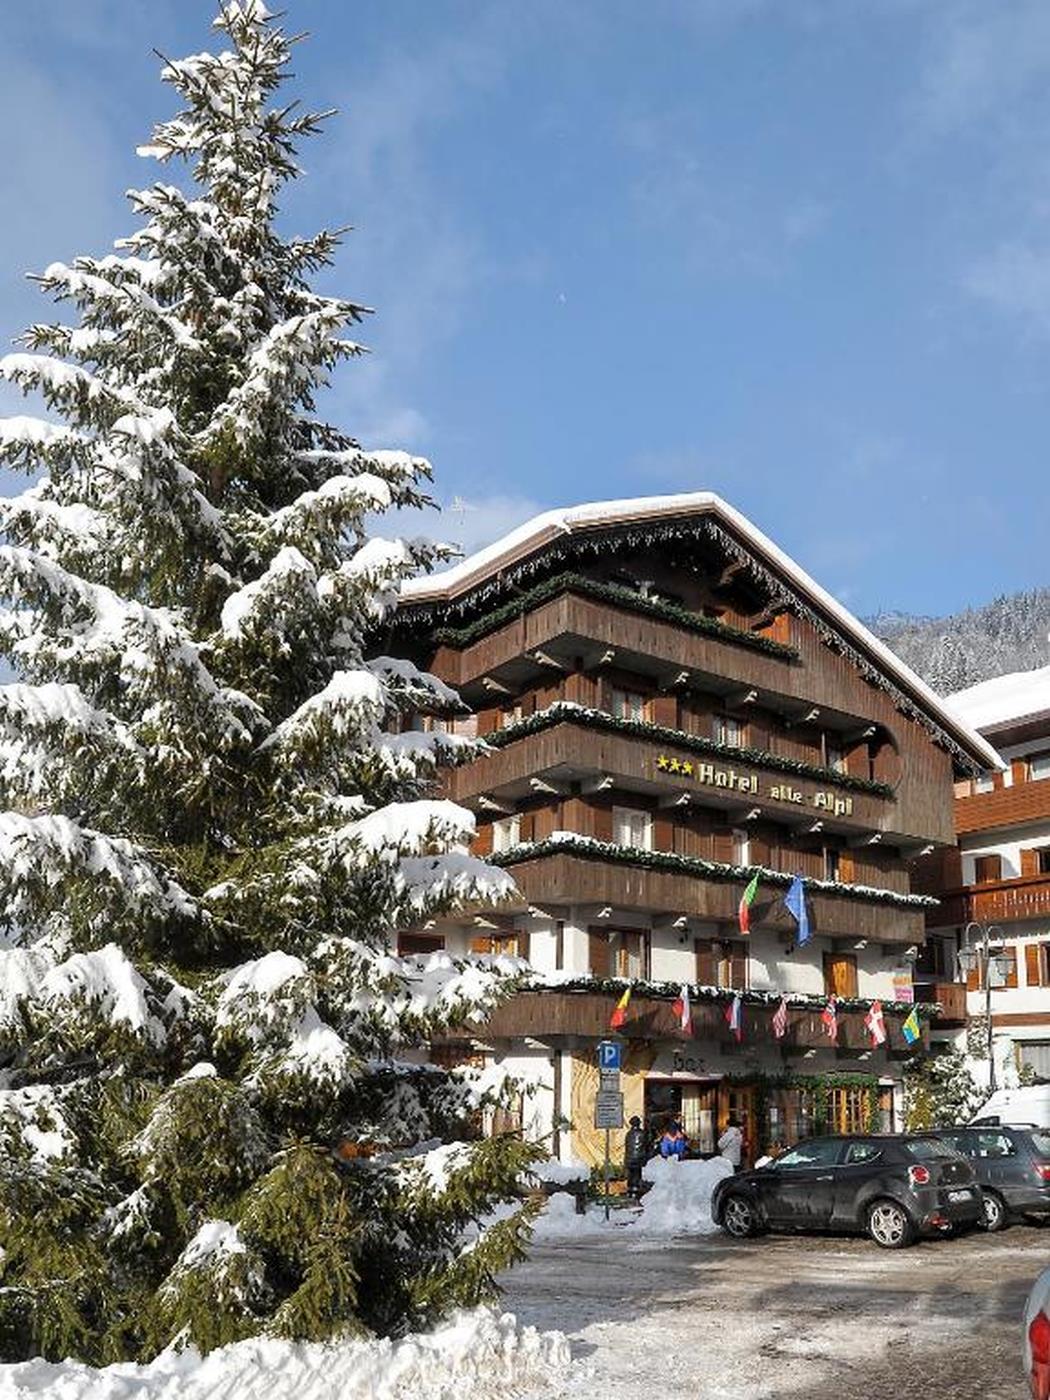 Hotel Alle Alpi***